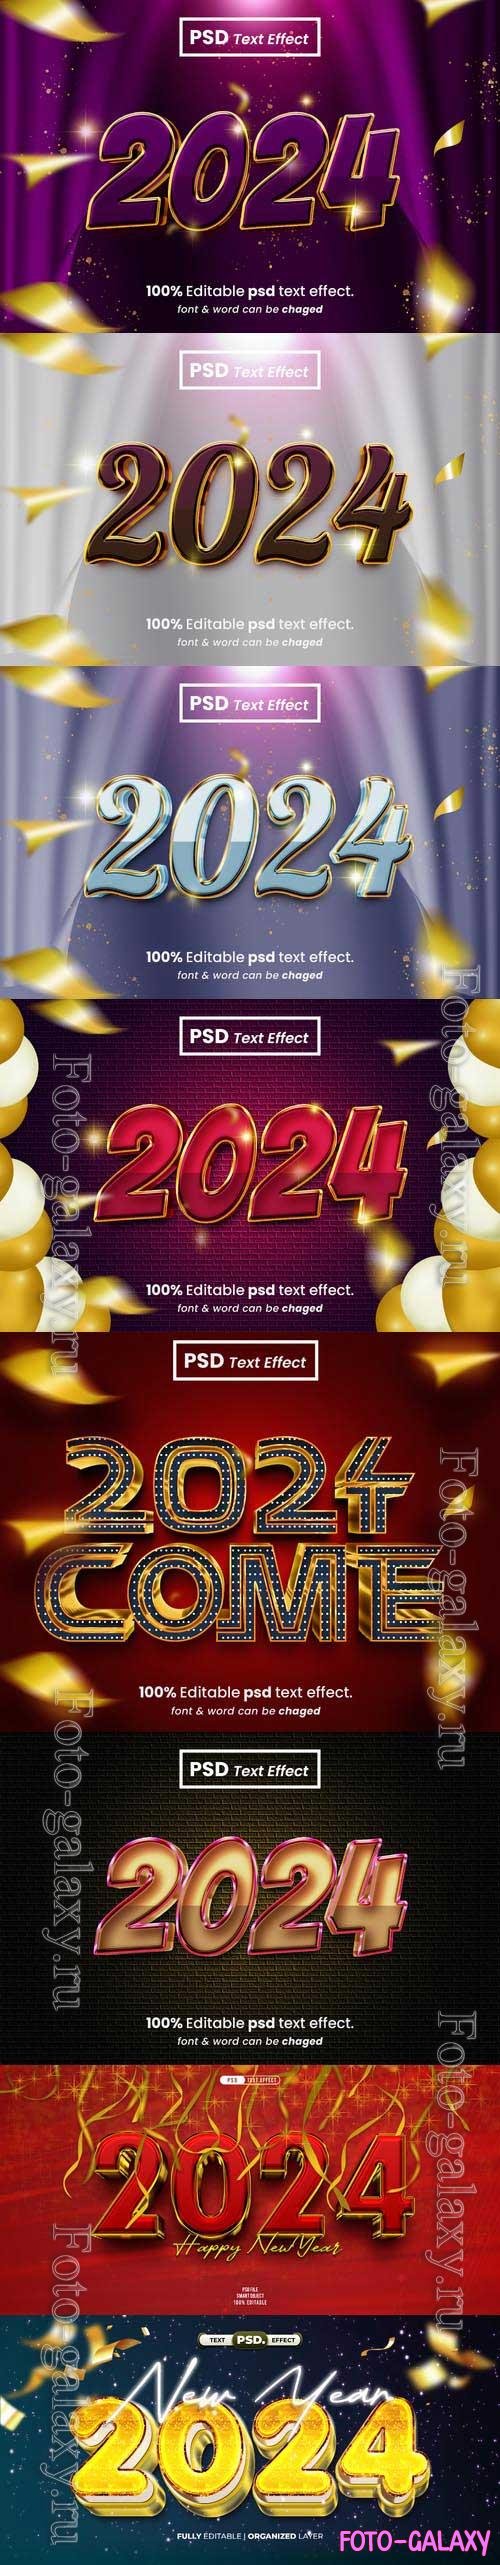 PSD new year 2024 3d editable text effect vol 3